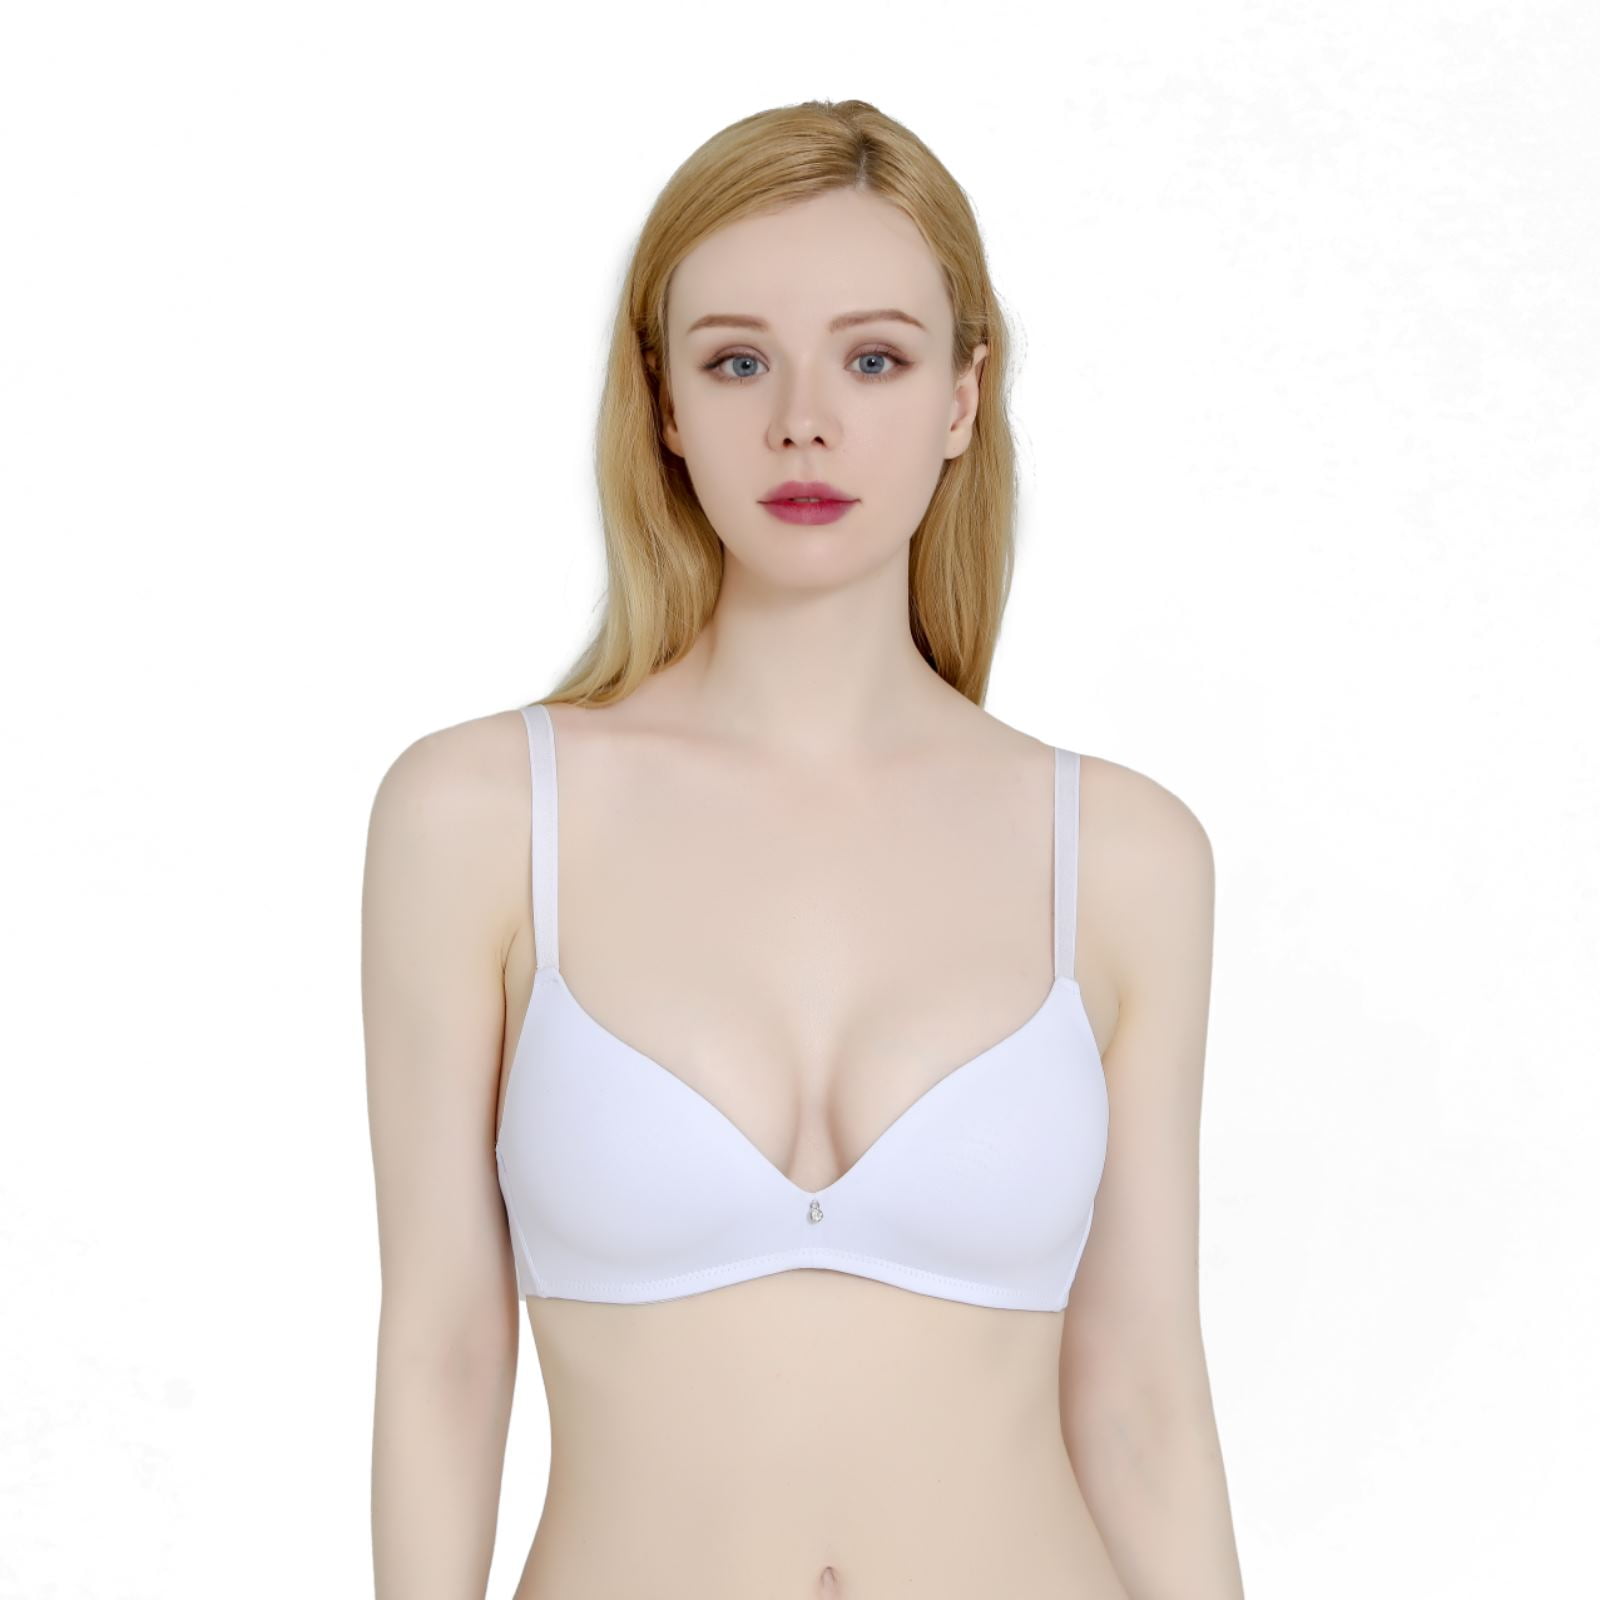 Wholesale teen bra size For Supportive Underwear 